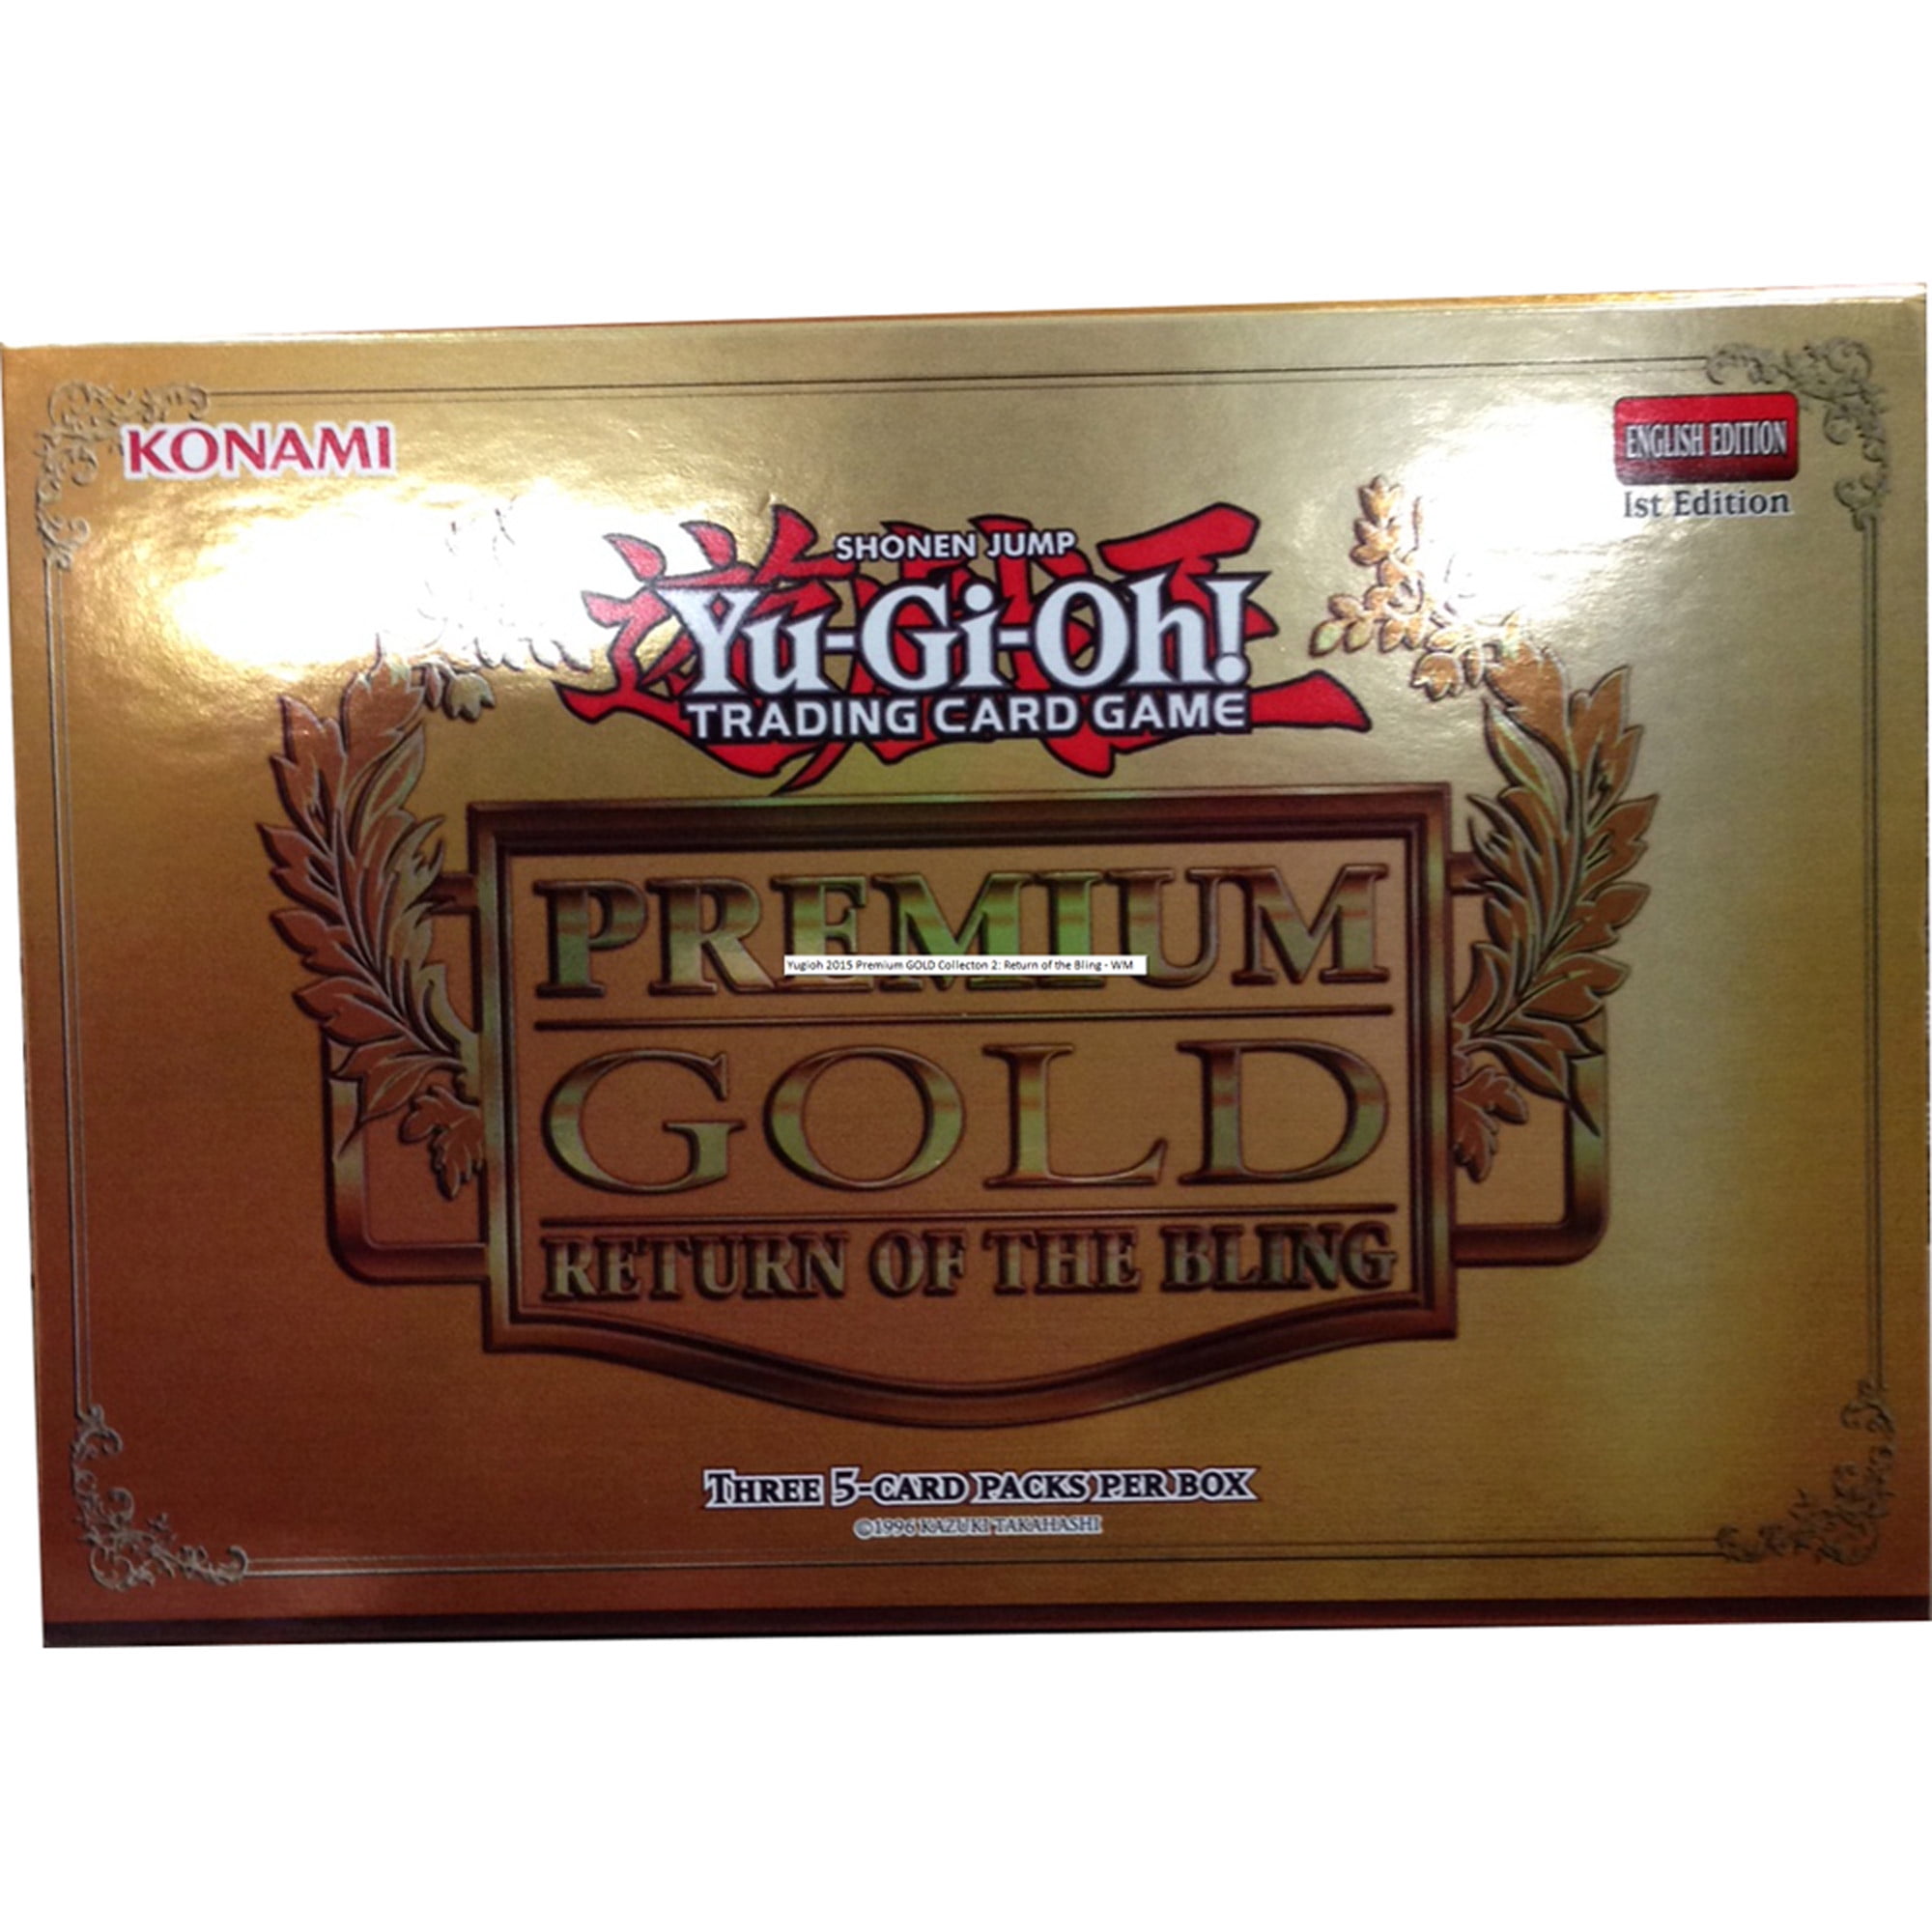 Yu-Gi-Oh Cards Premium Gold Infinite Gold 2016 Sealed New Mini Box with 3 packs 